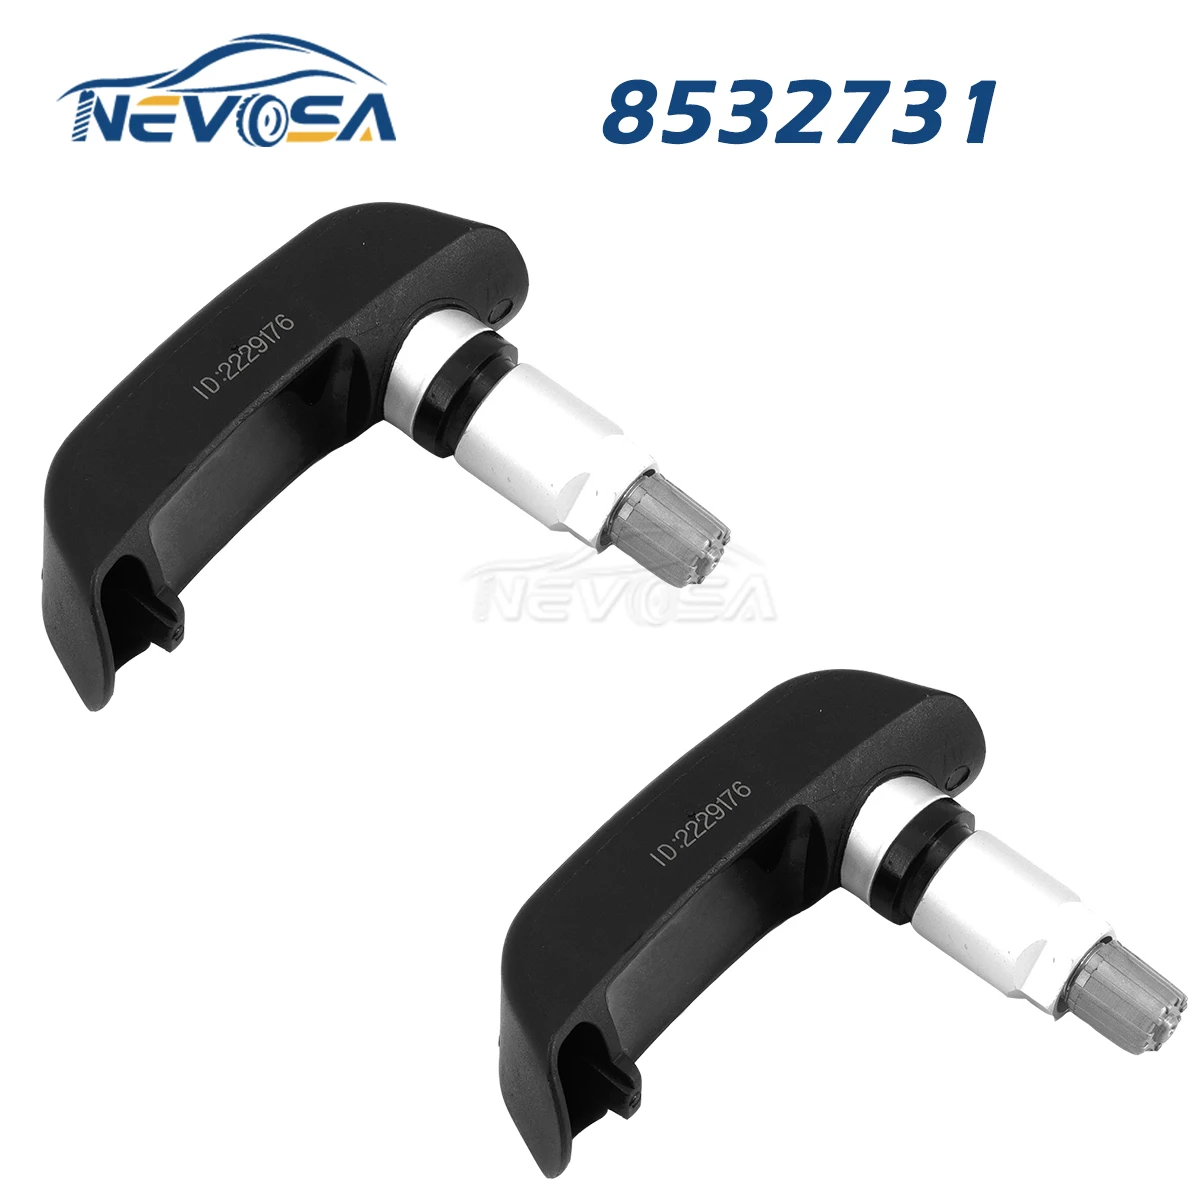 NEVOSA 8532731 TPMS Sensor For BMW Motorcycle BMW F 650 700 800 BMW K 1200 1300 1600 BMW R 900 1200 36318532731 1/2PCS